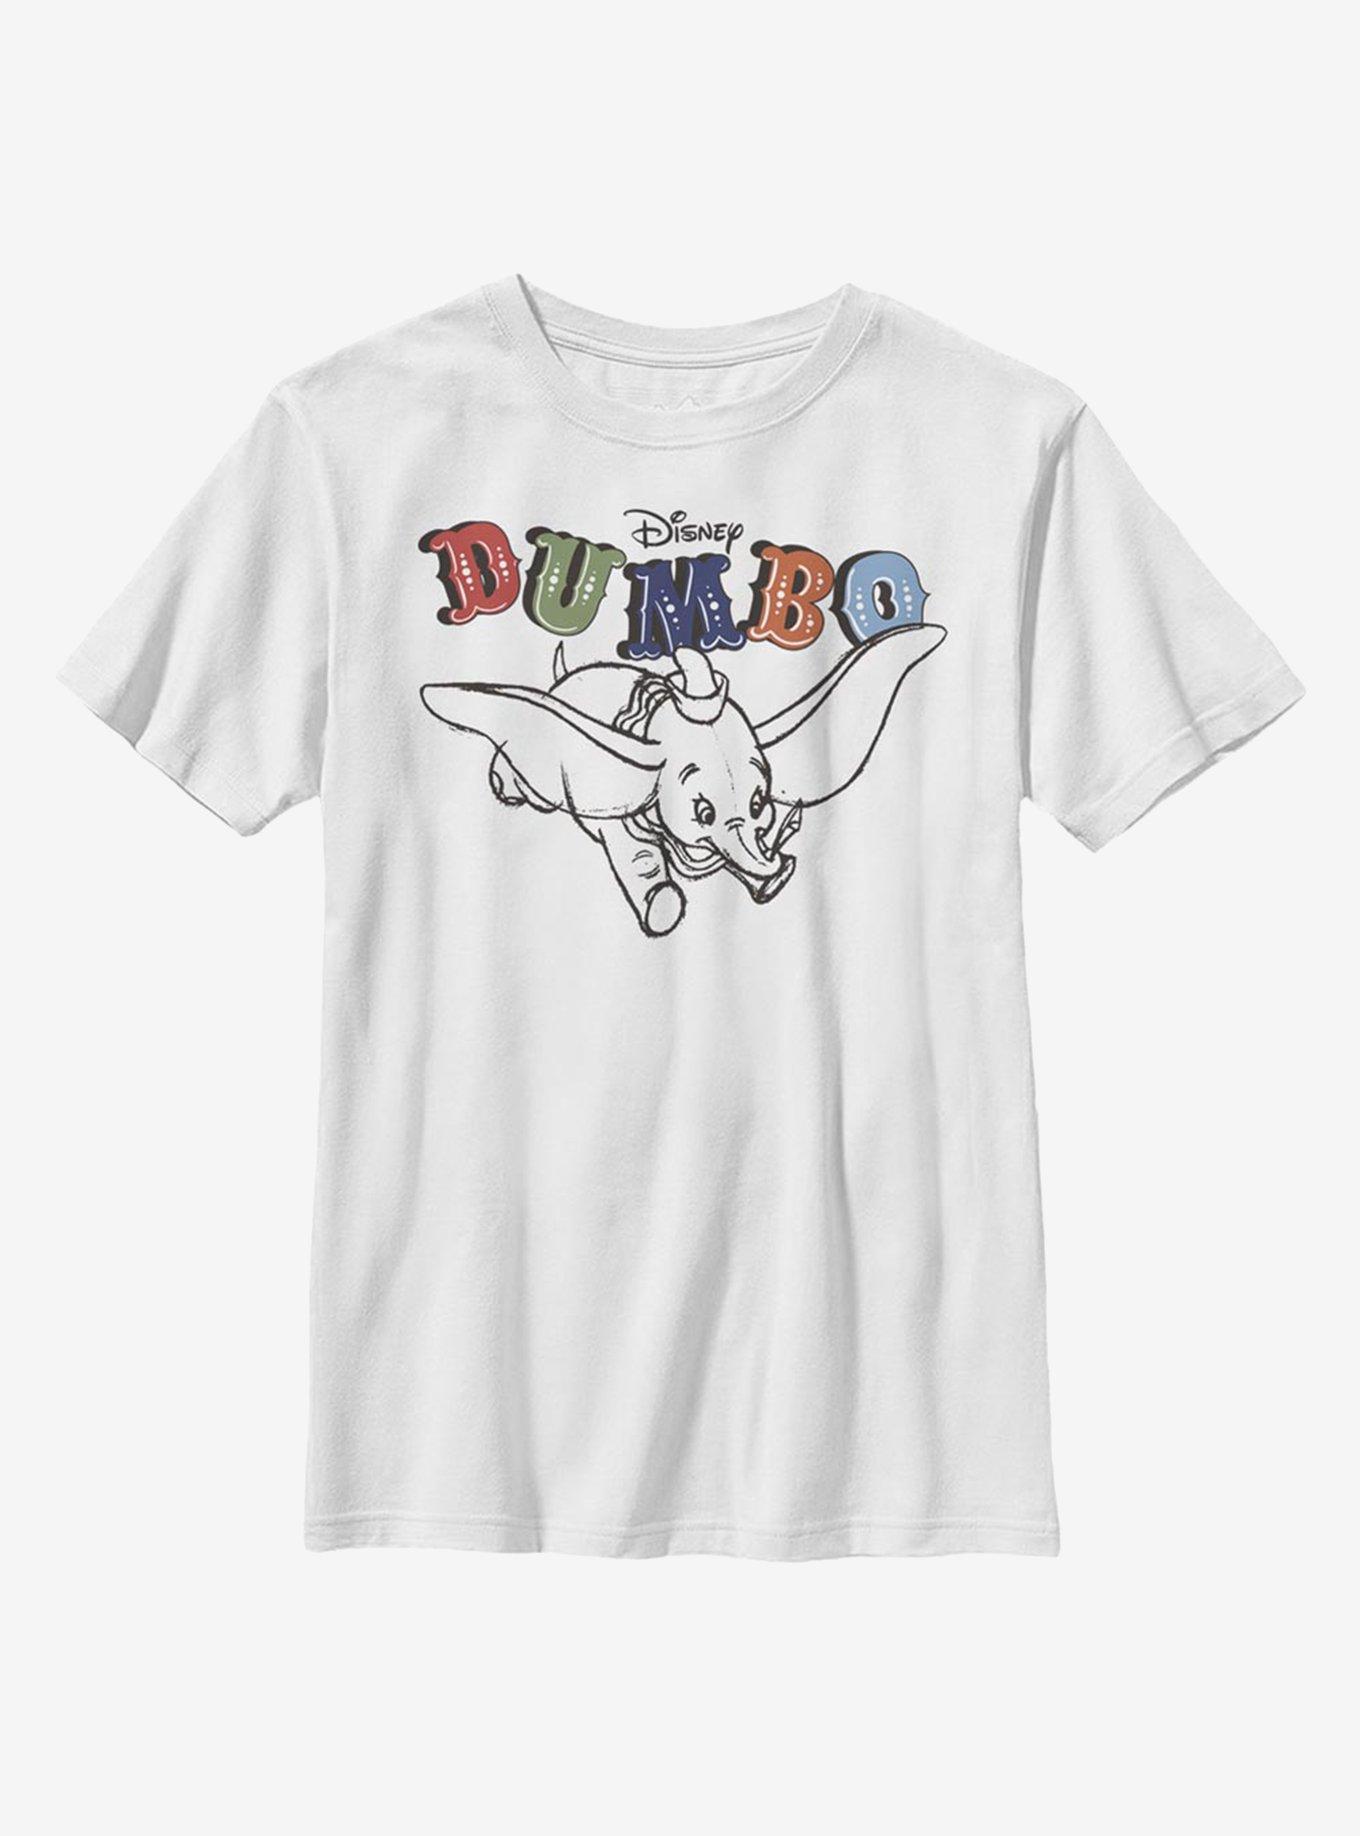 Disney Dumbo Flying Circus Youth T-Shirt, WHITE, hi-res